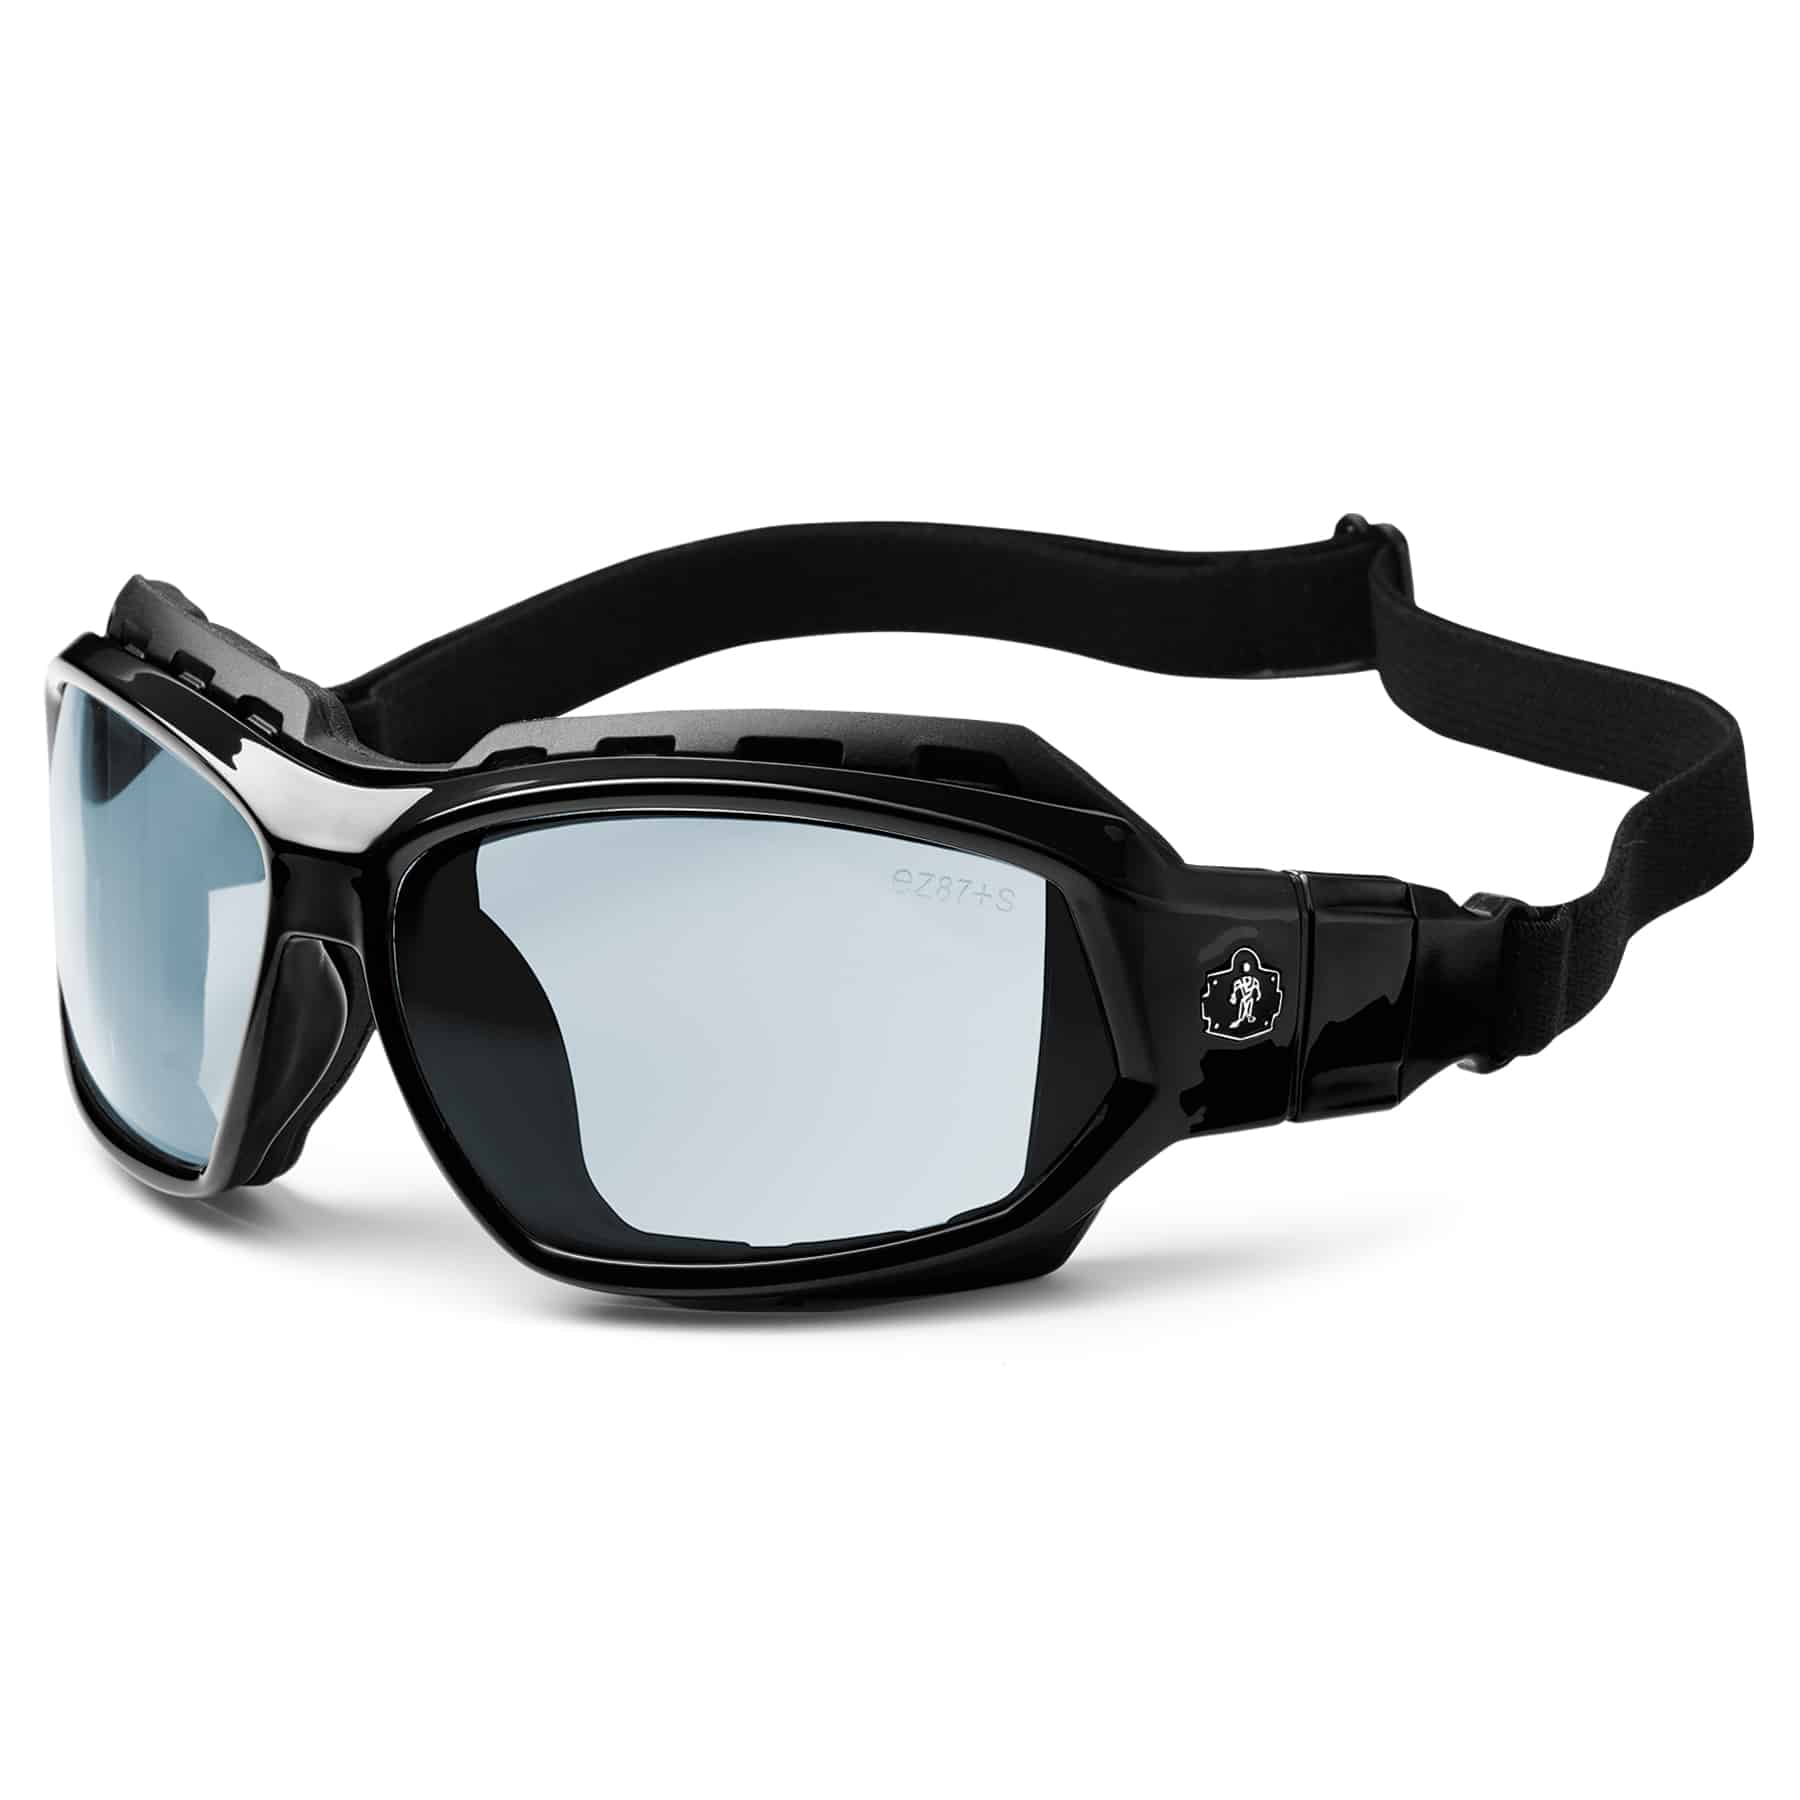 Ergodyne SkullerzÂ® Loki Safety Glasses // Sunglasses, Black, Anti-Fog In/Outdoor Lens - image 4 of 6